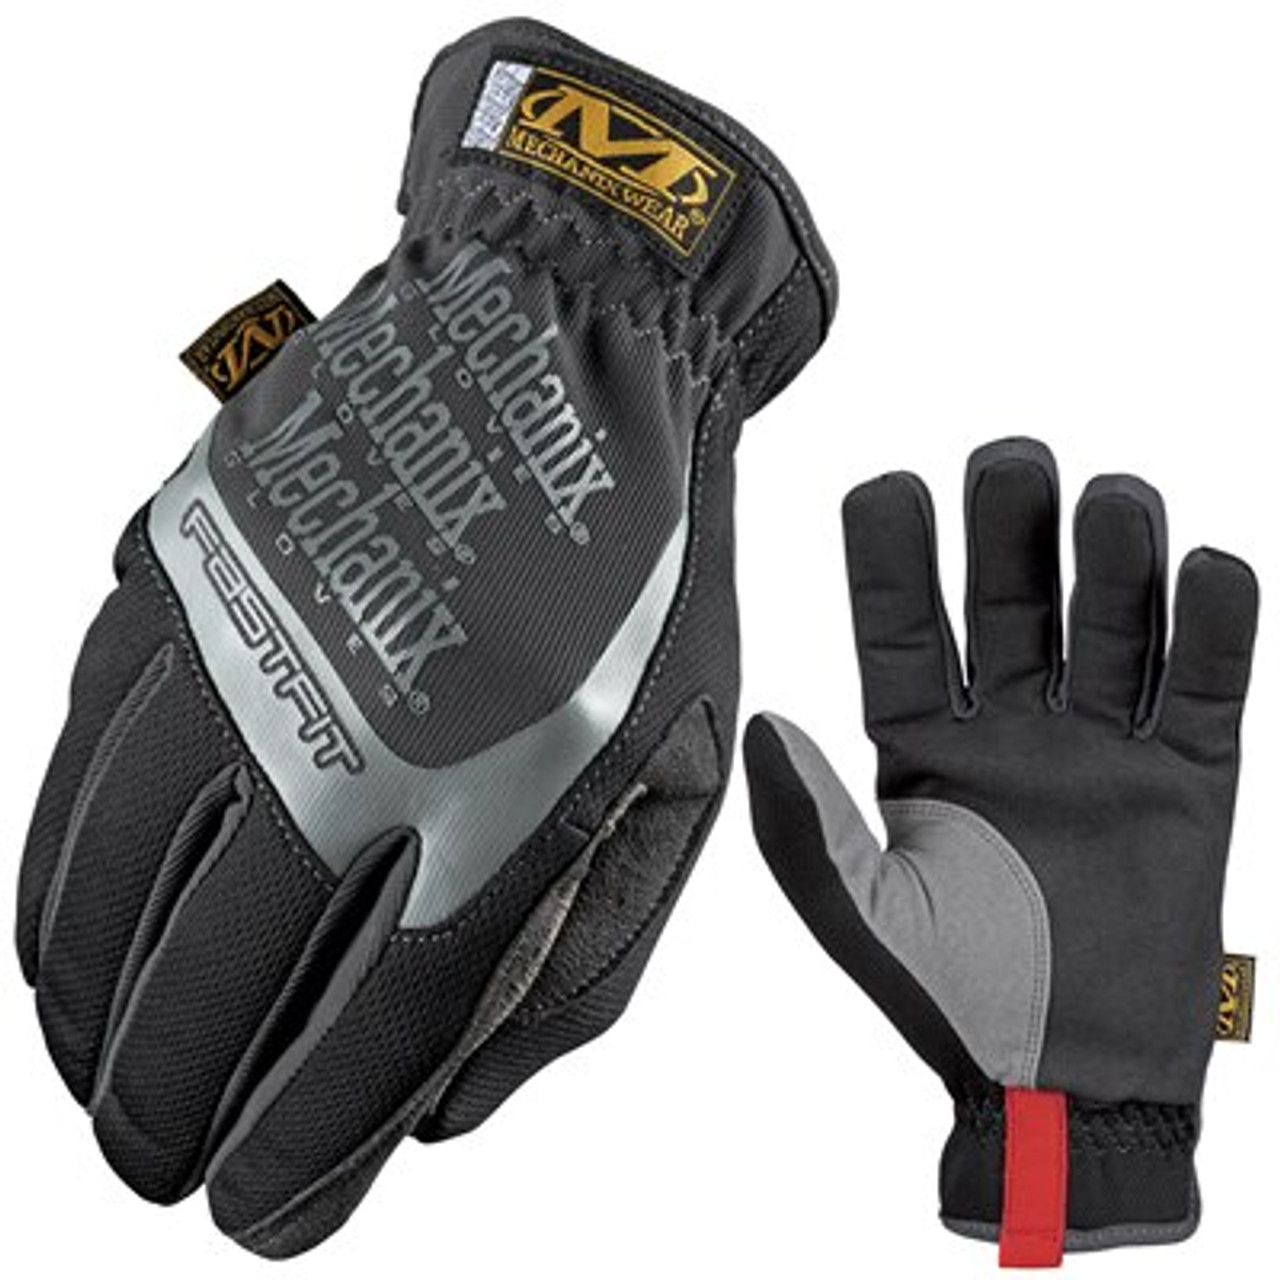 Mechanix Wear FastFit Multi-Purpose Gloves - All Colors